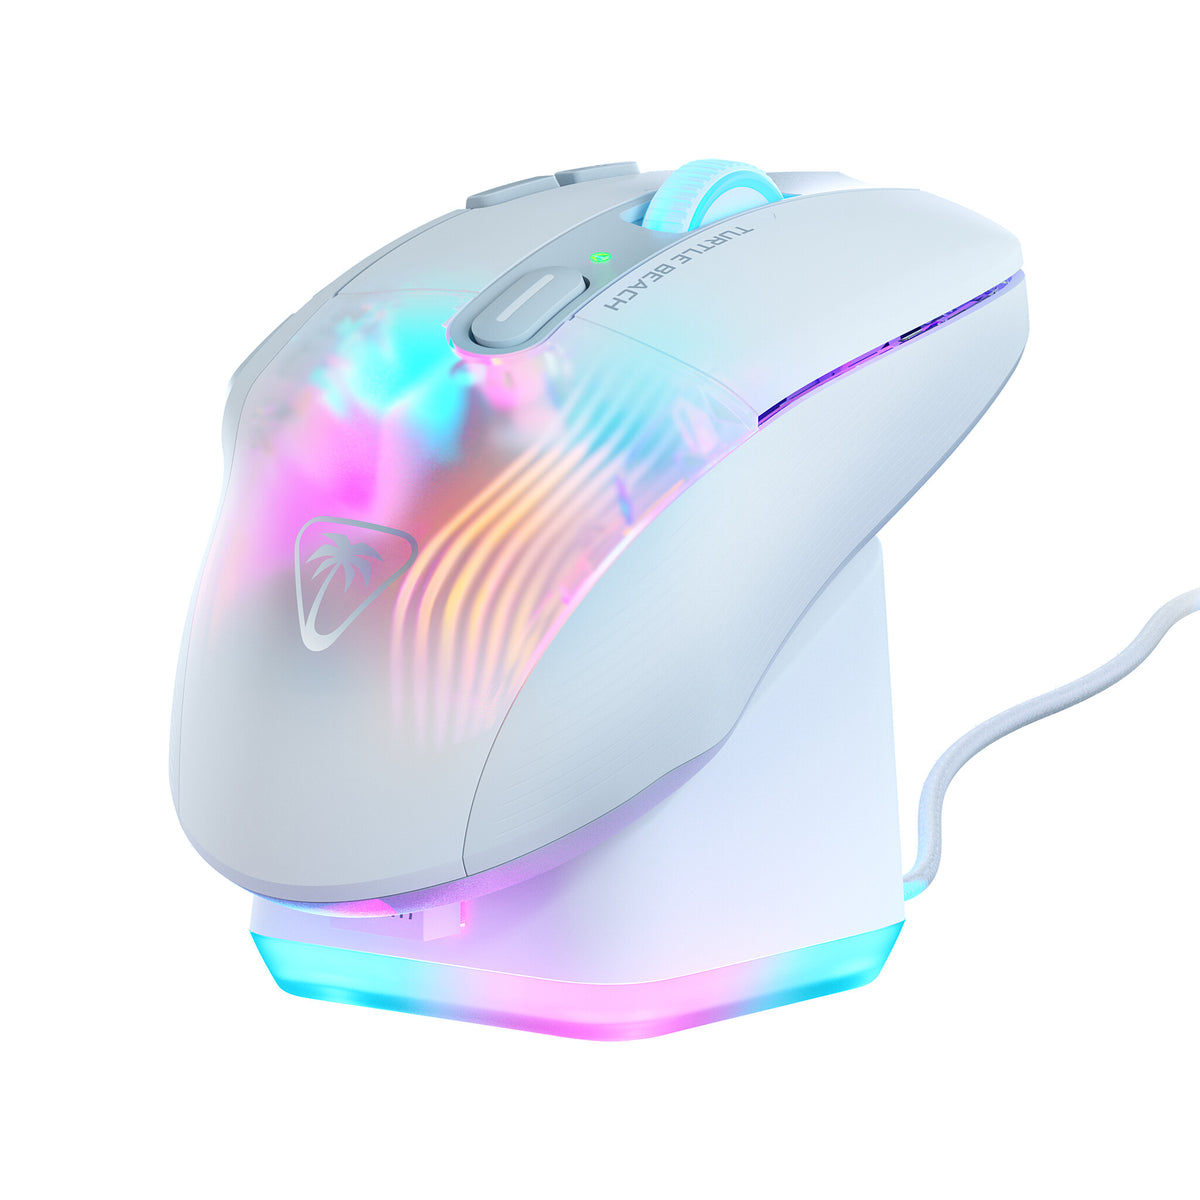 Turtle Beach Kone XP Air - RF Wireless + Bluetooth Optical Gaming Mouse in White - 19,000 DPI